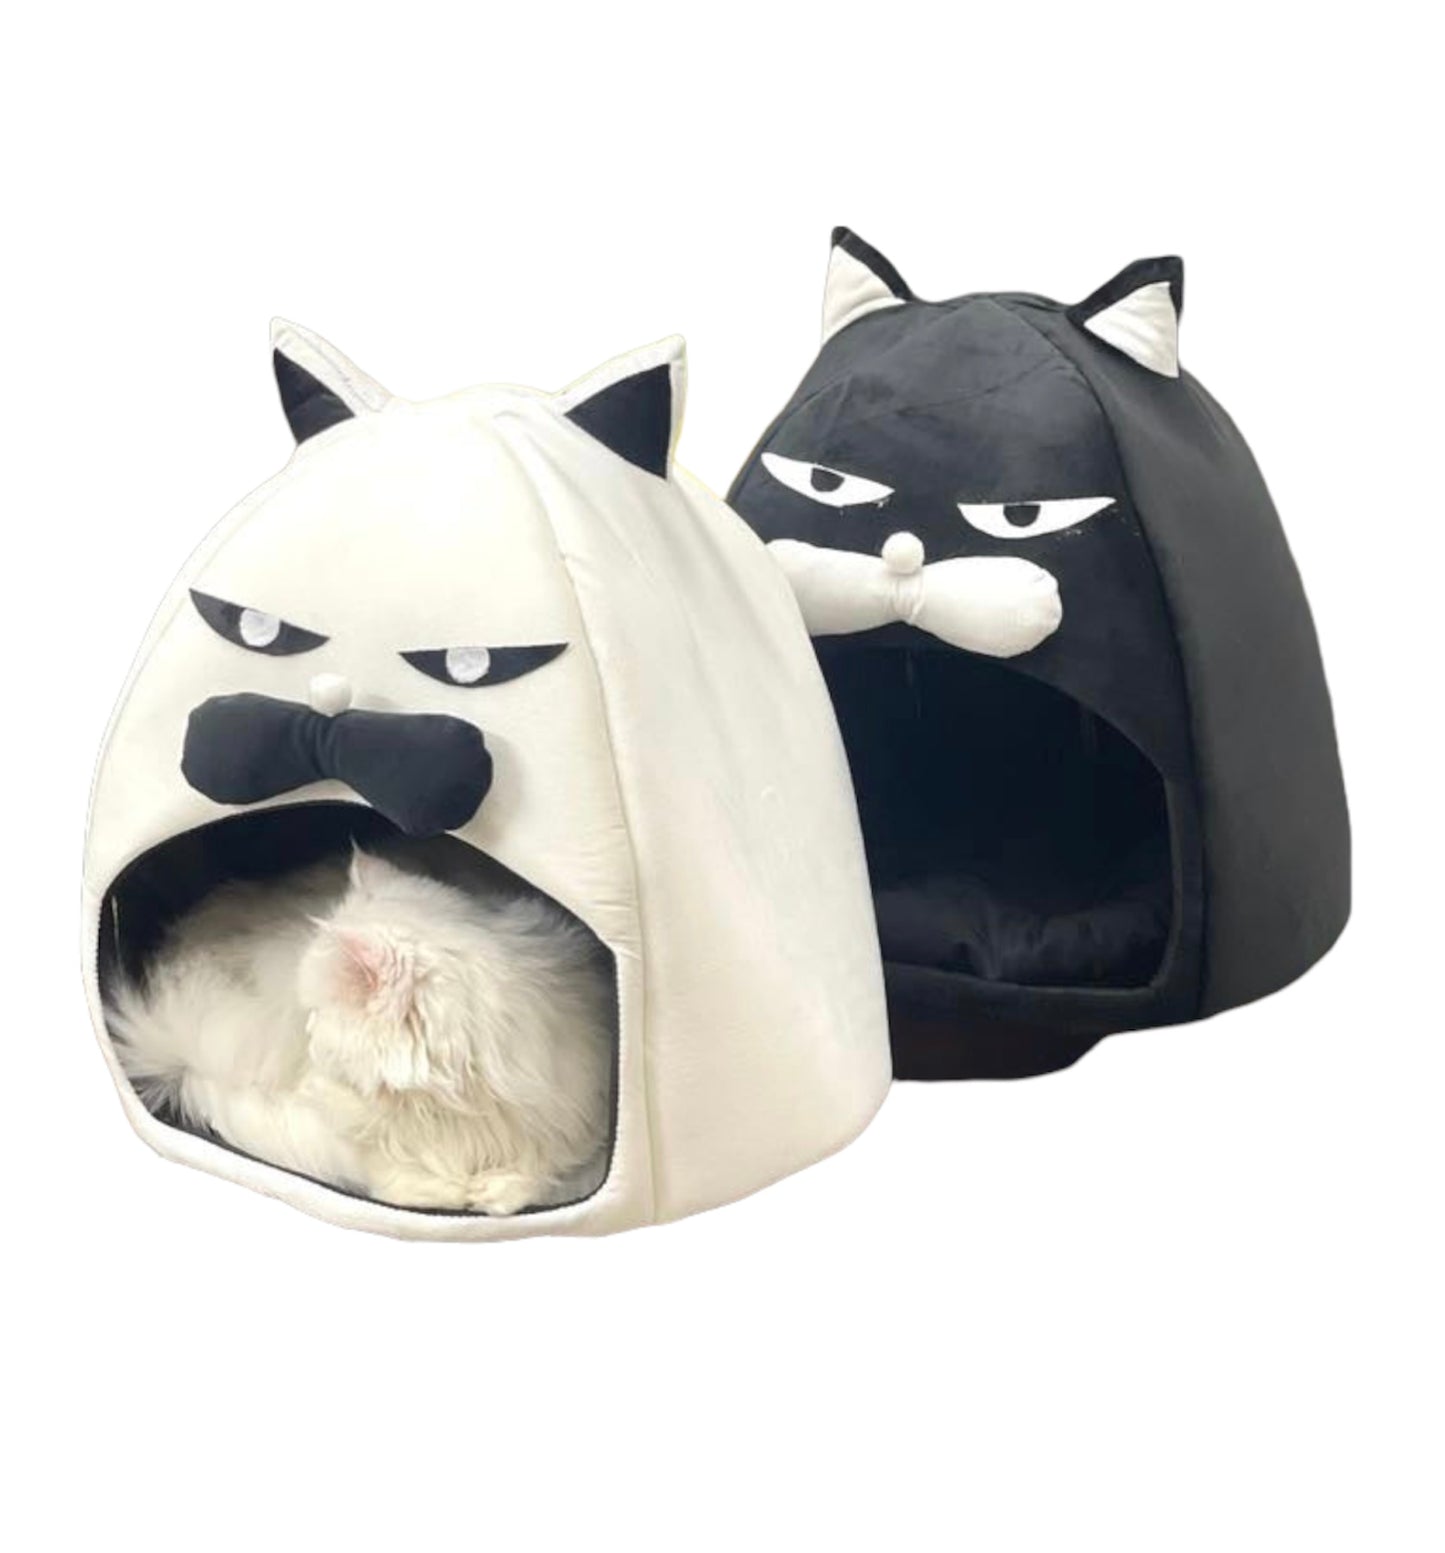 Mr. Grumpy pet house | Free shipping